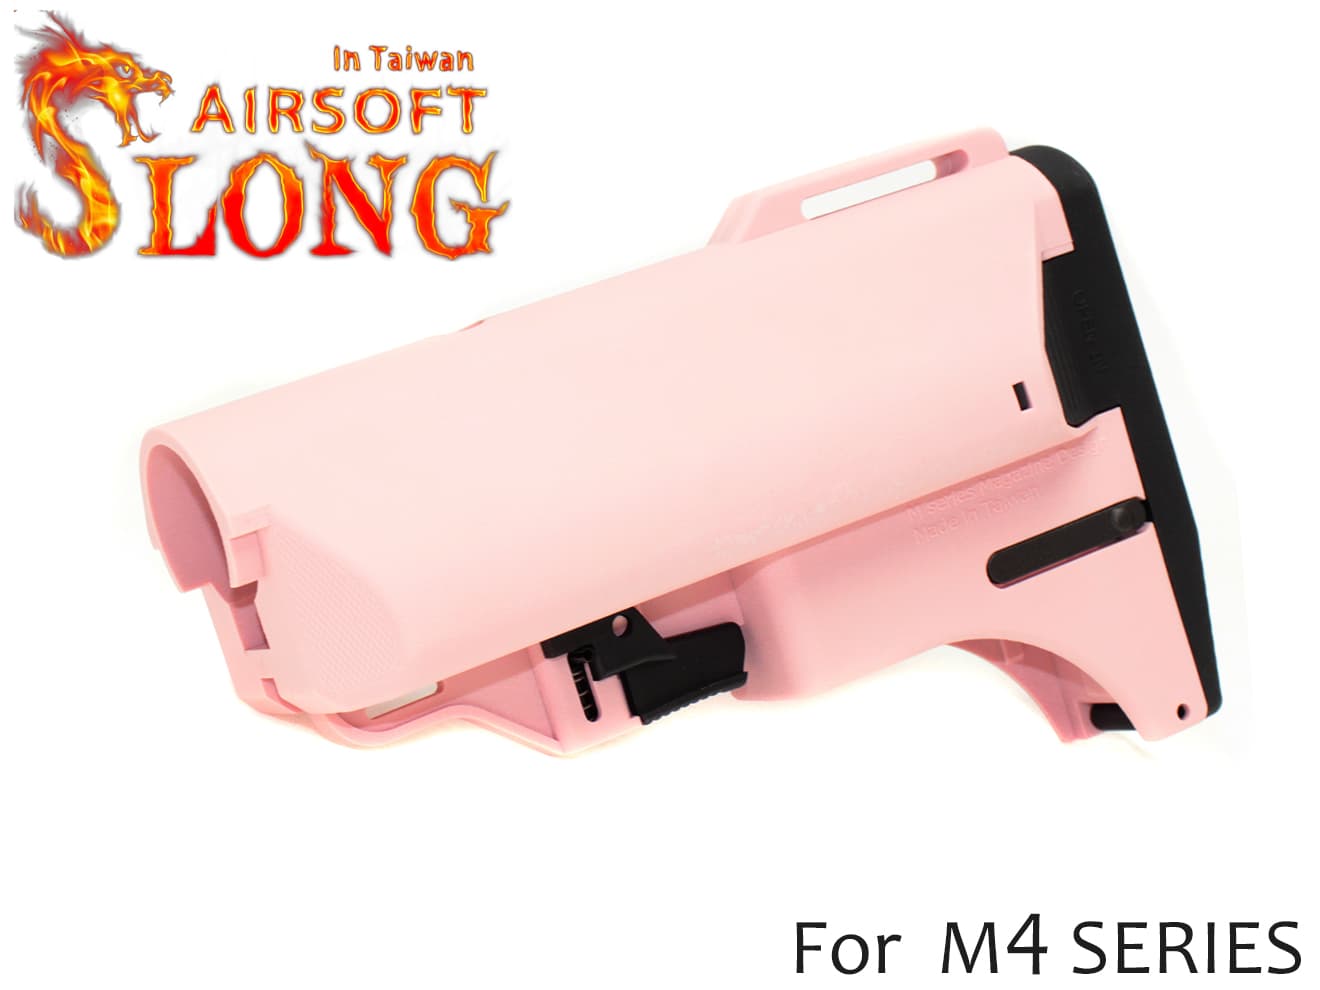 SLONG AIRSOFT マガジンホルダーストック M4◆PINK 各社電動ガン ガスガン M4シリーズ対応 マガジンキャッチ搭載 11.1Vバッテリーも収納可